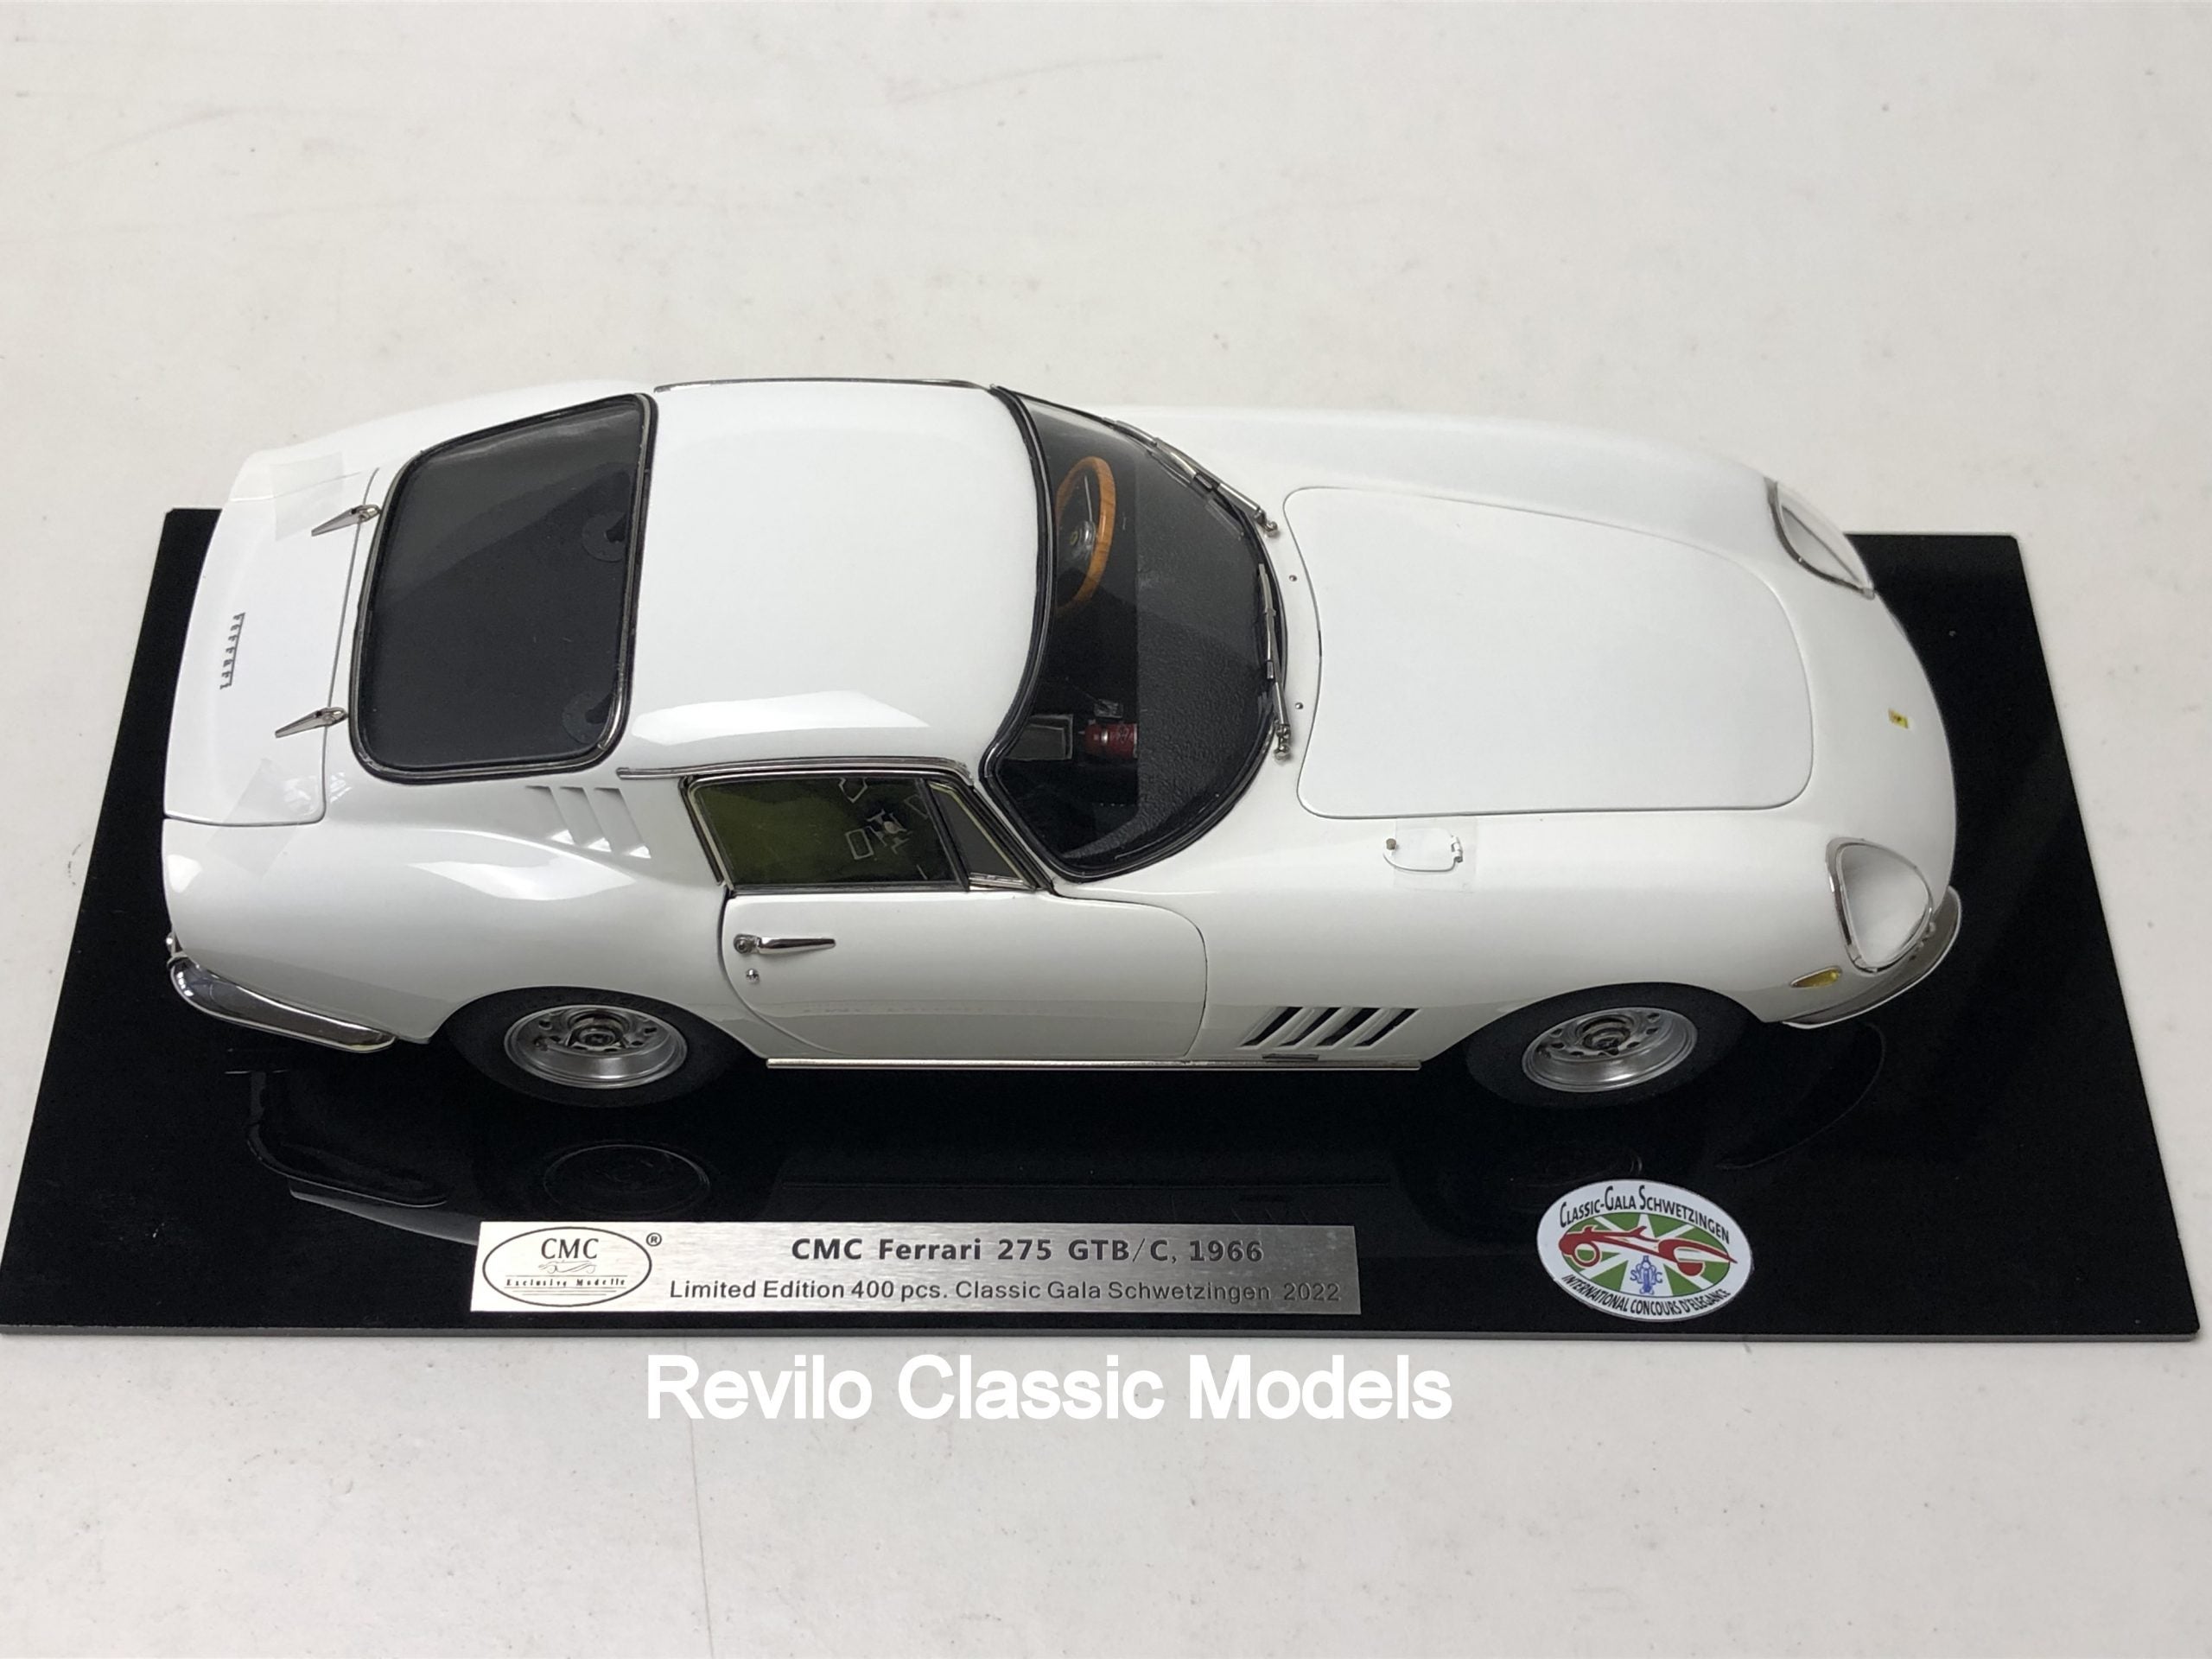 CMC M241 1:18 Ferrari 275 GTB/C Ivory Limited Edition